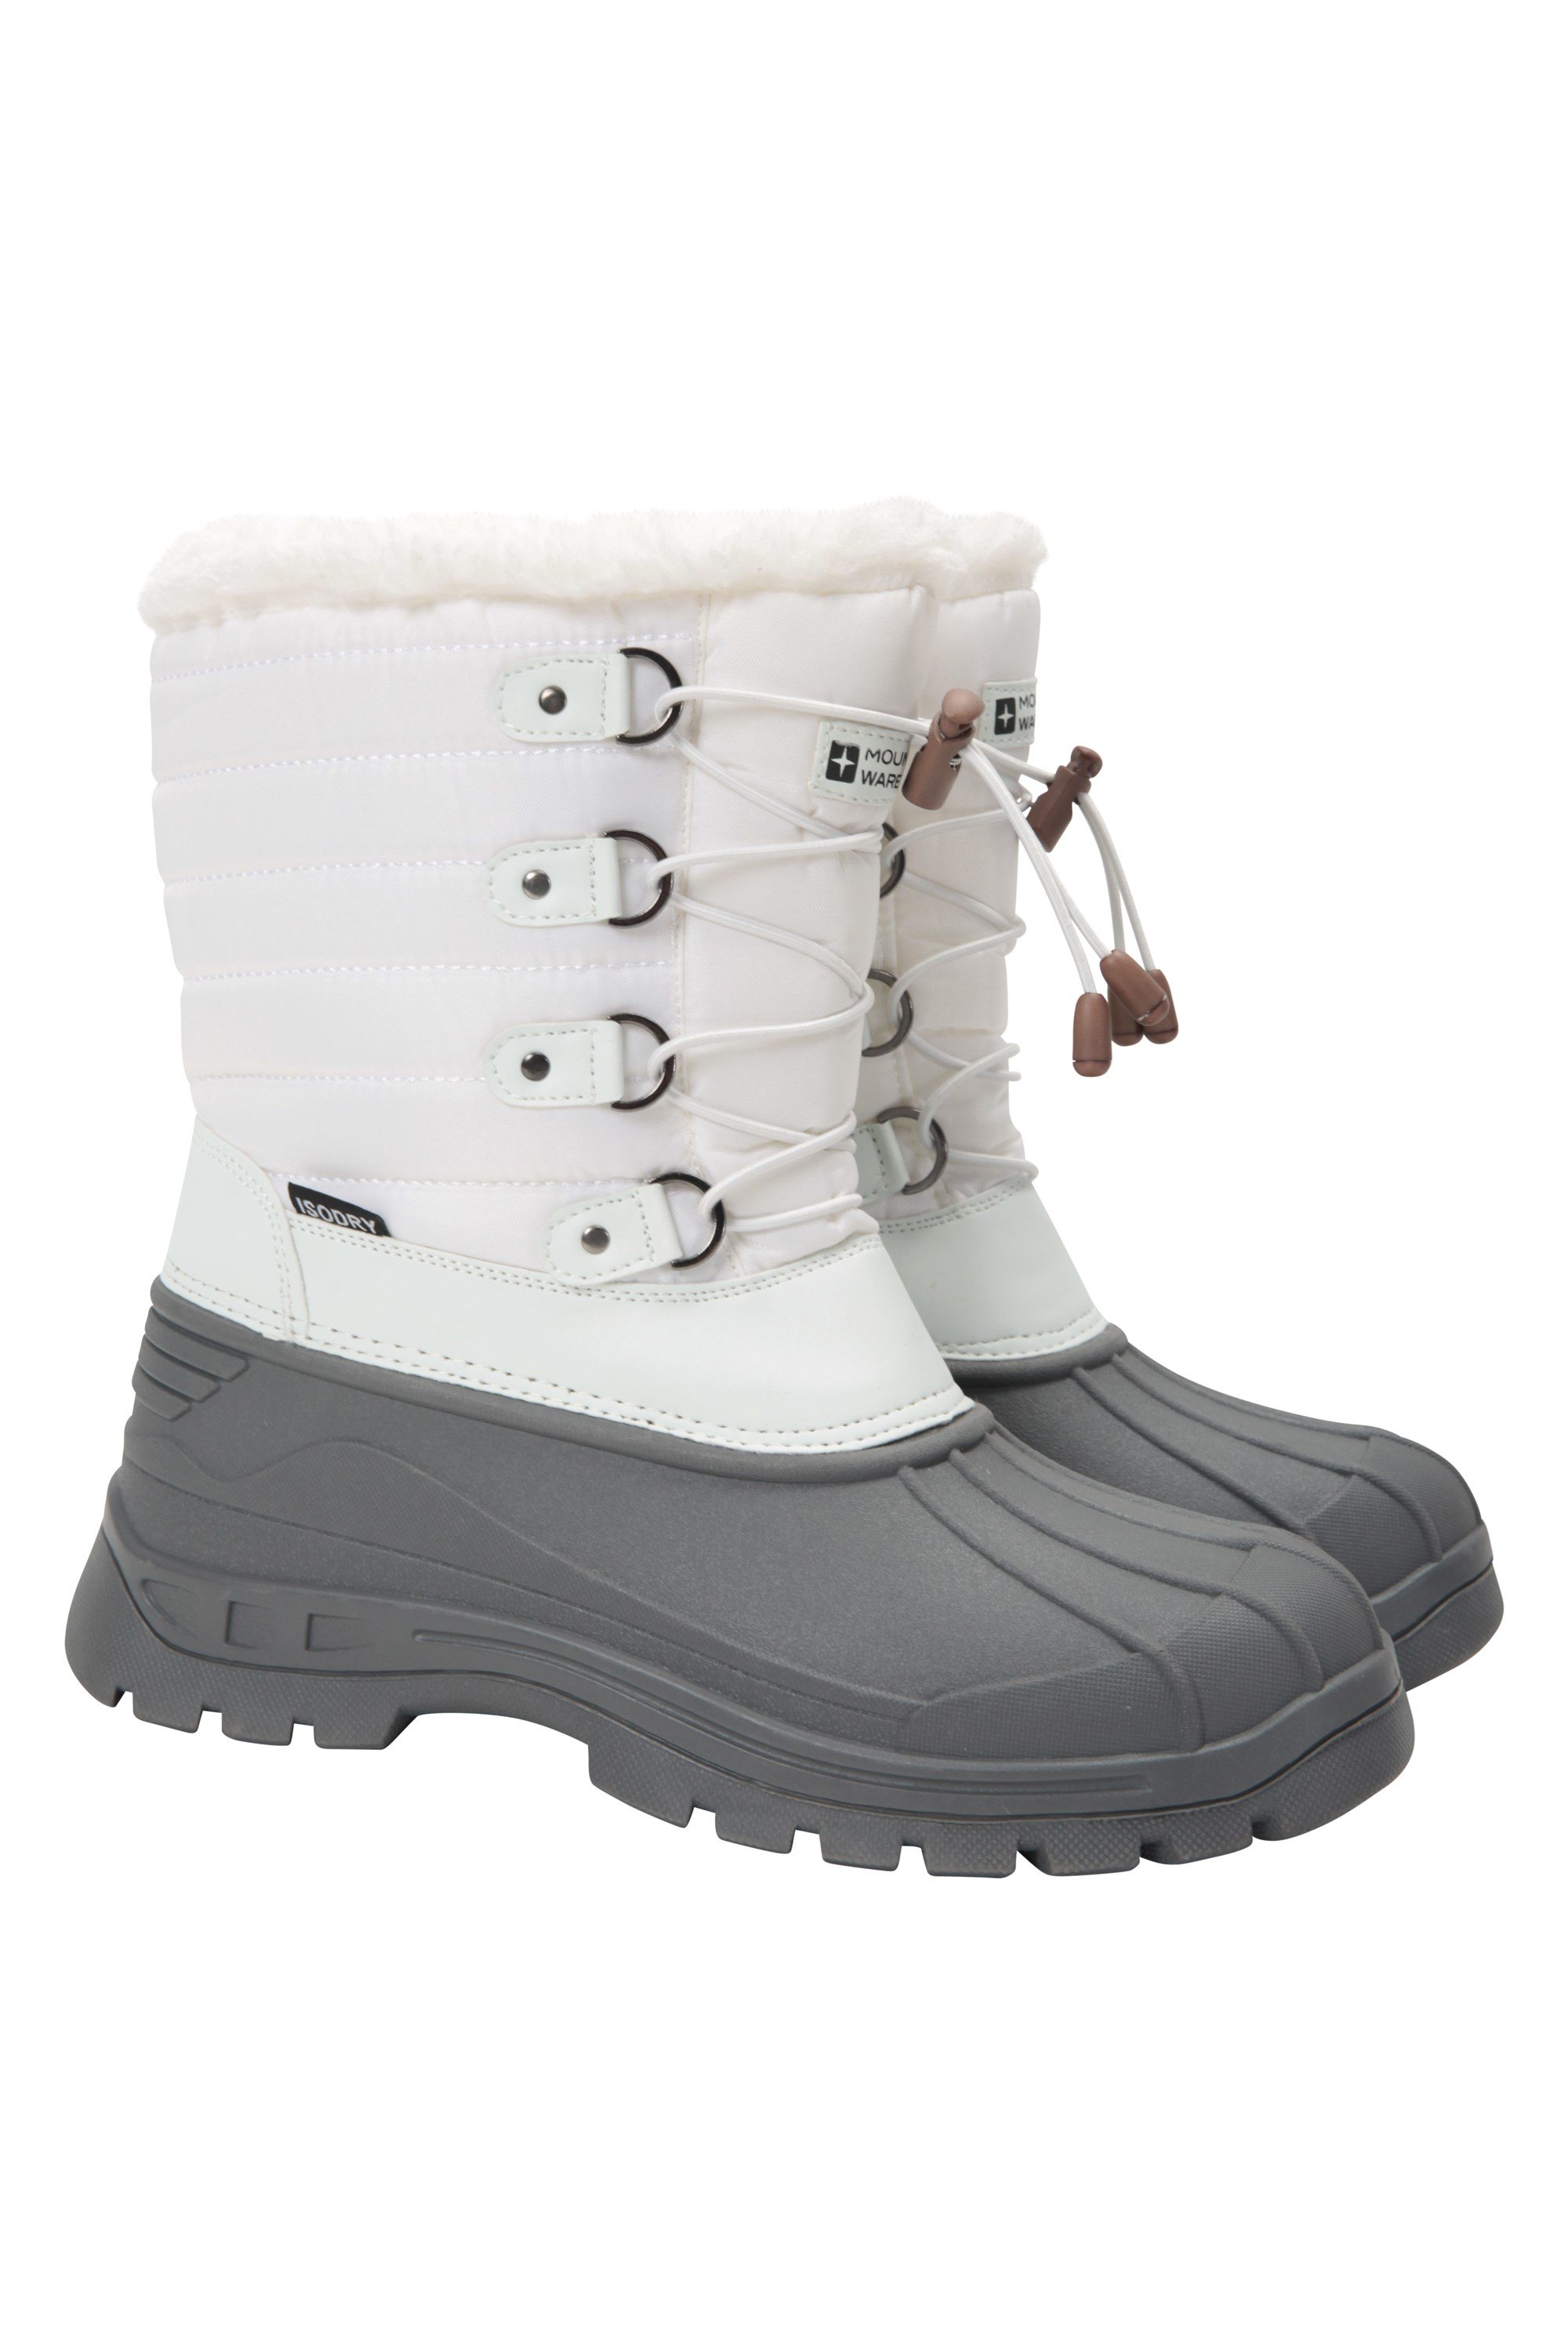 buy snow boots uk